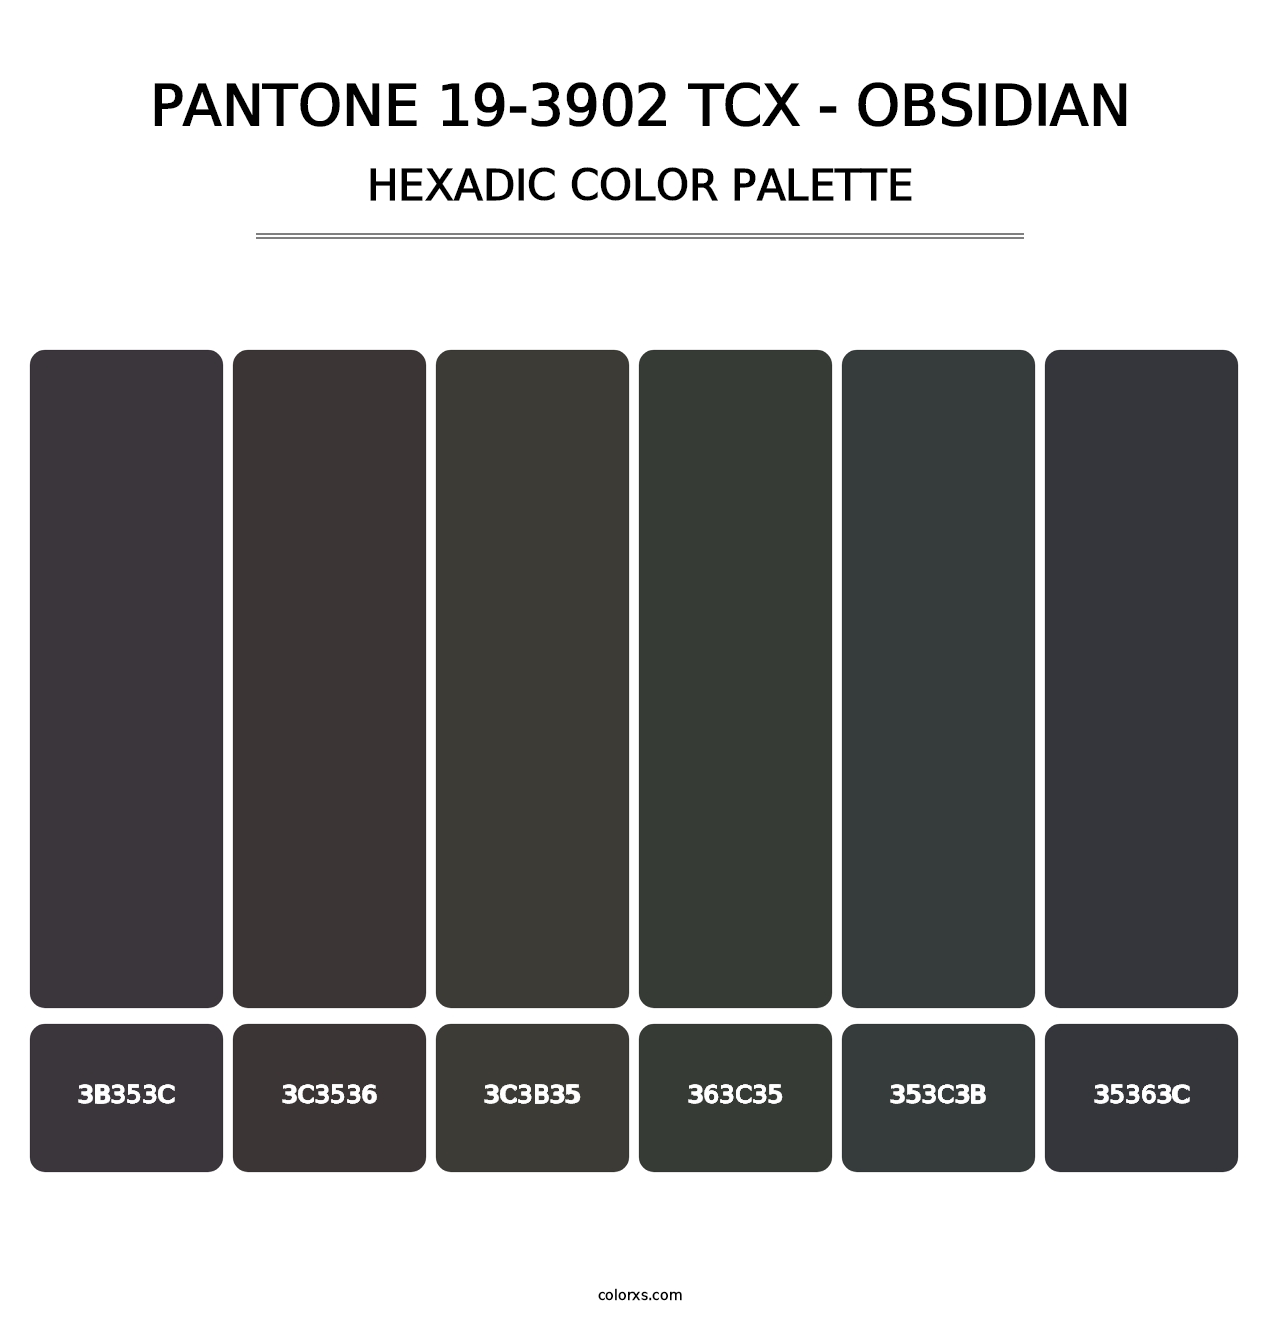 PANTONE 19-3902 TCX - Obsidian - Hexadic Color Palette